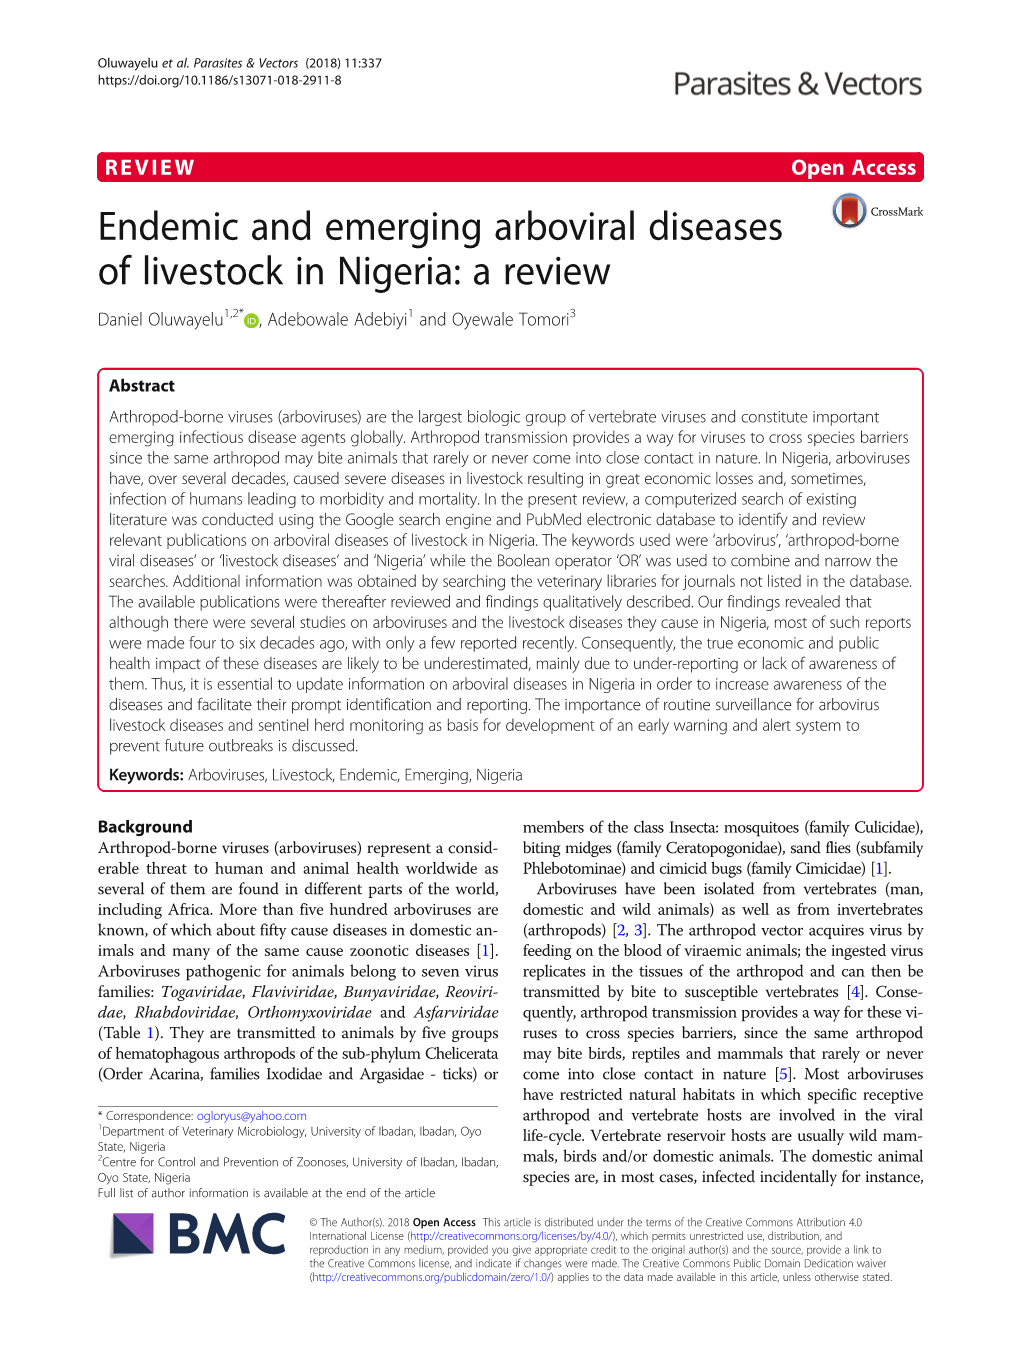 Endemic and Emerging Arboviral Diseases of Livestock in Nigeria: a Review Daniel Oluwayelu1,2* , Adebowale Adebiyi1 and Oyewale Tomori3